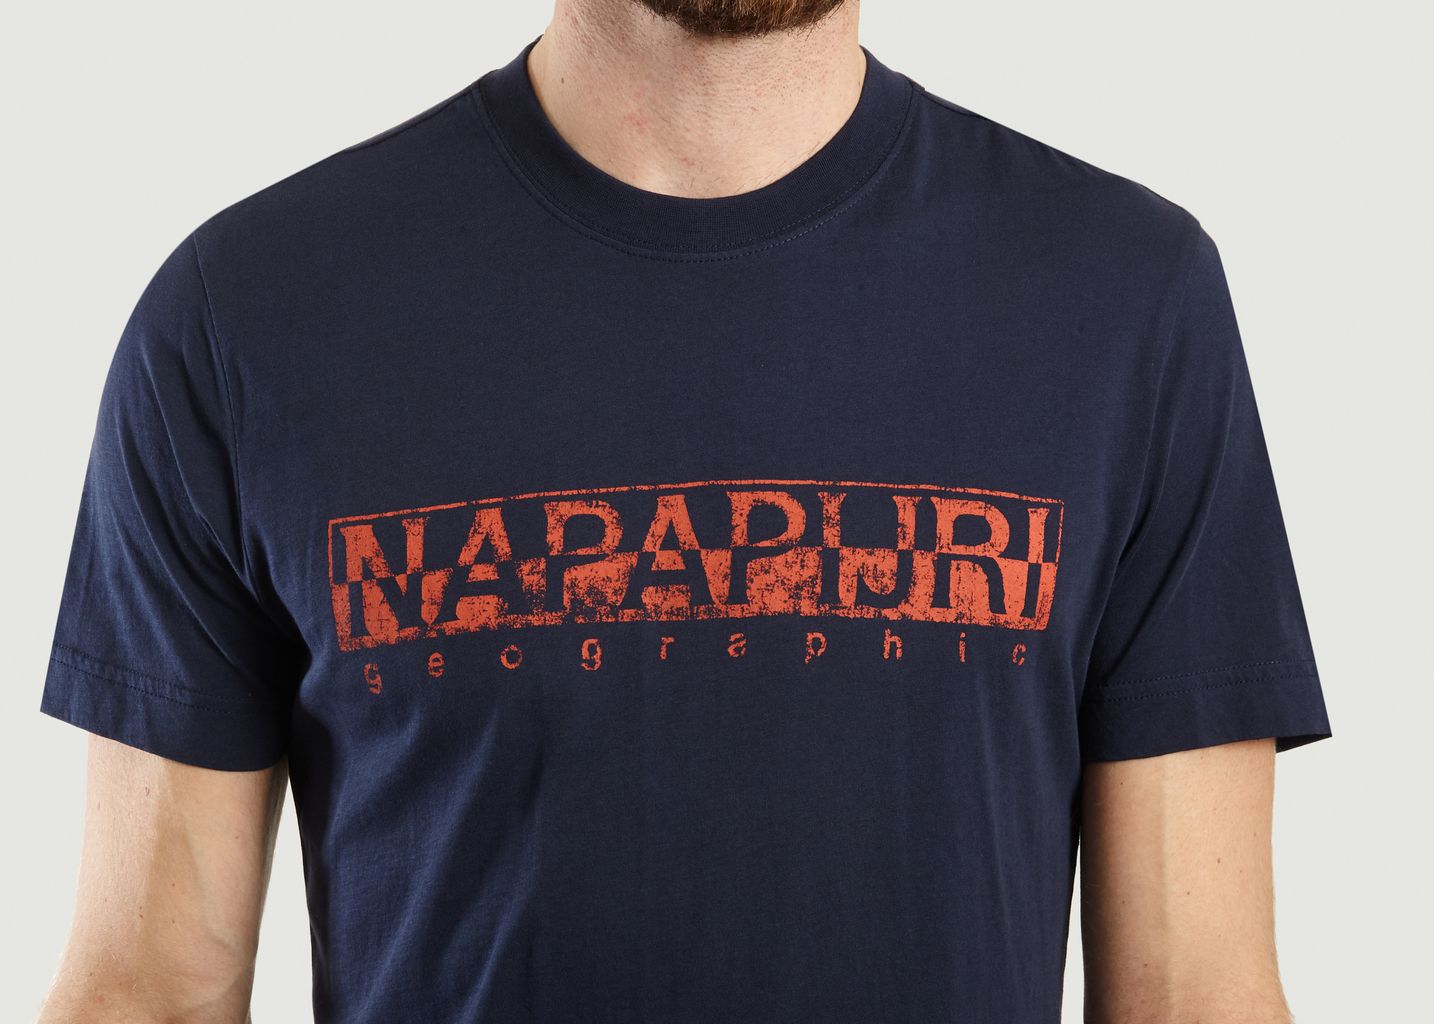 Solanos t-shirt - Napapijri